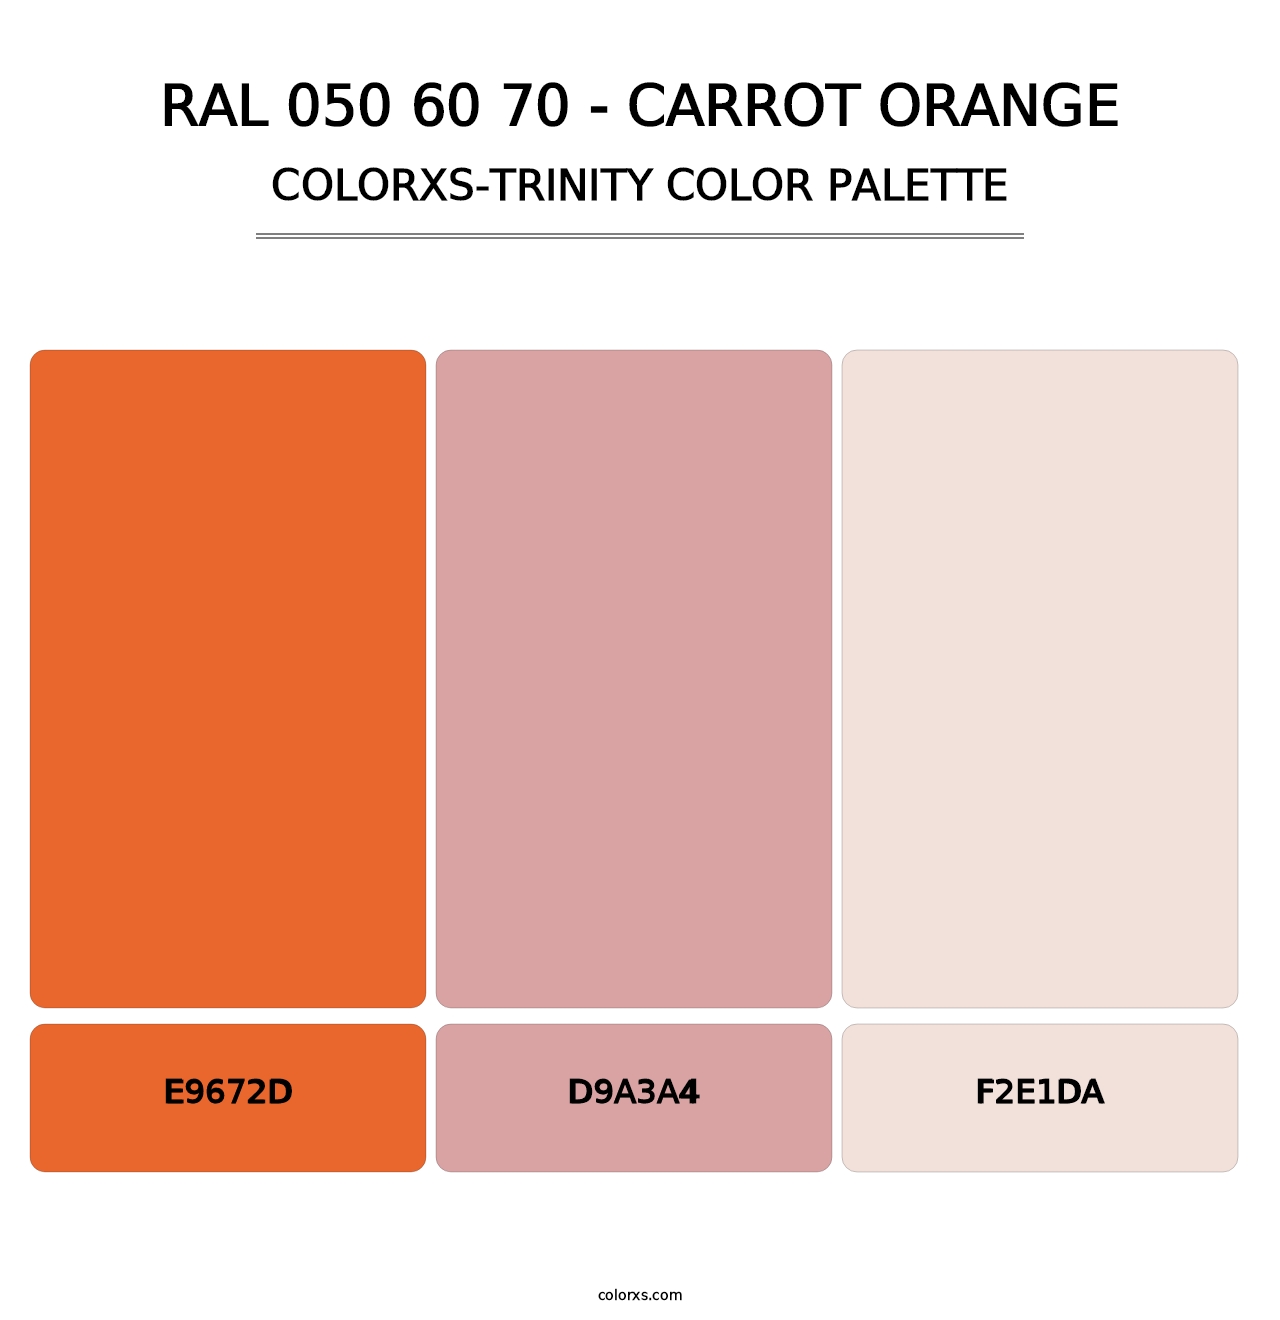 RAL 050 60 70 - Carrot Orange - Colorxs Trinity Palette